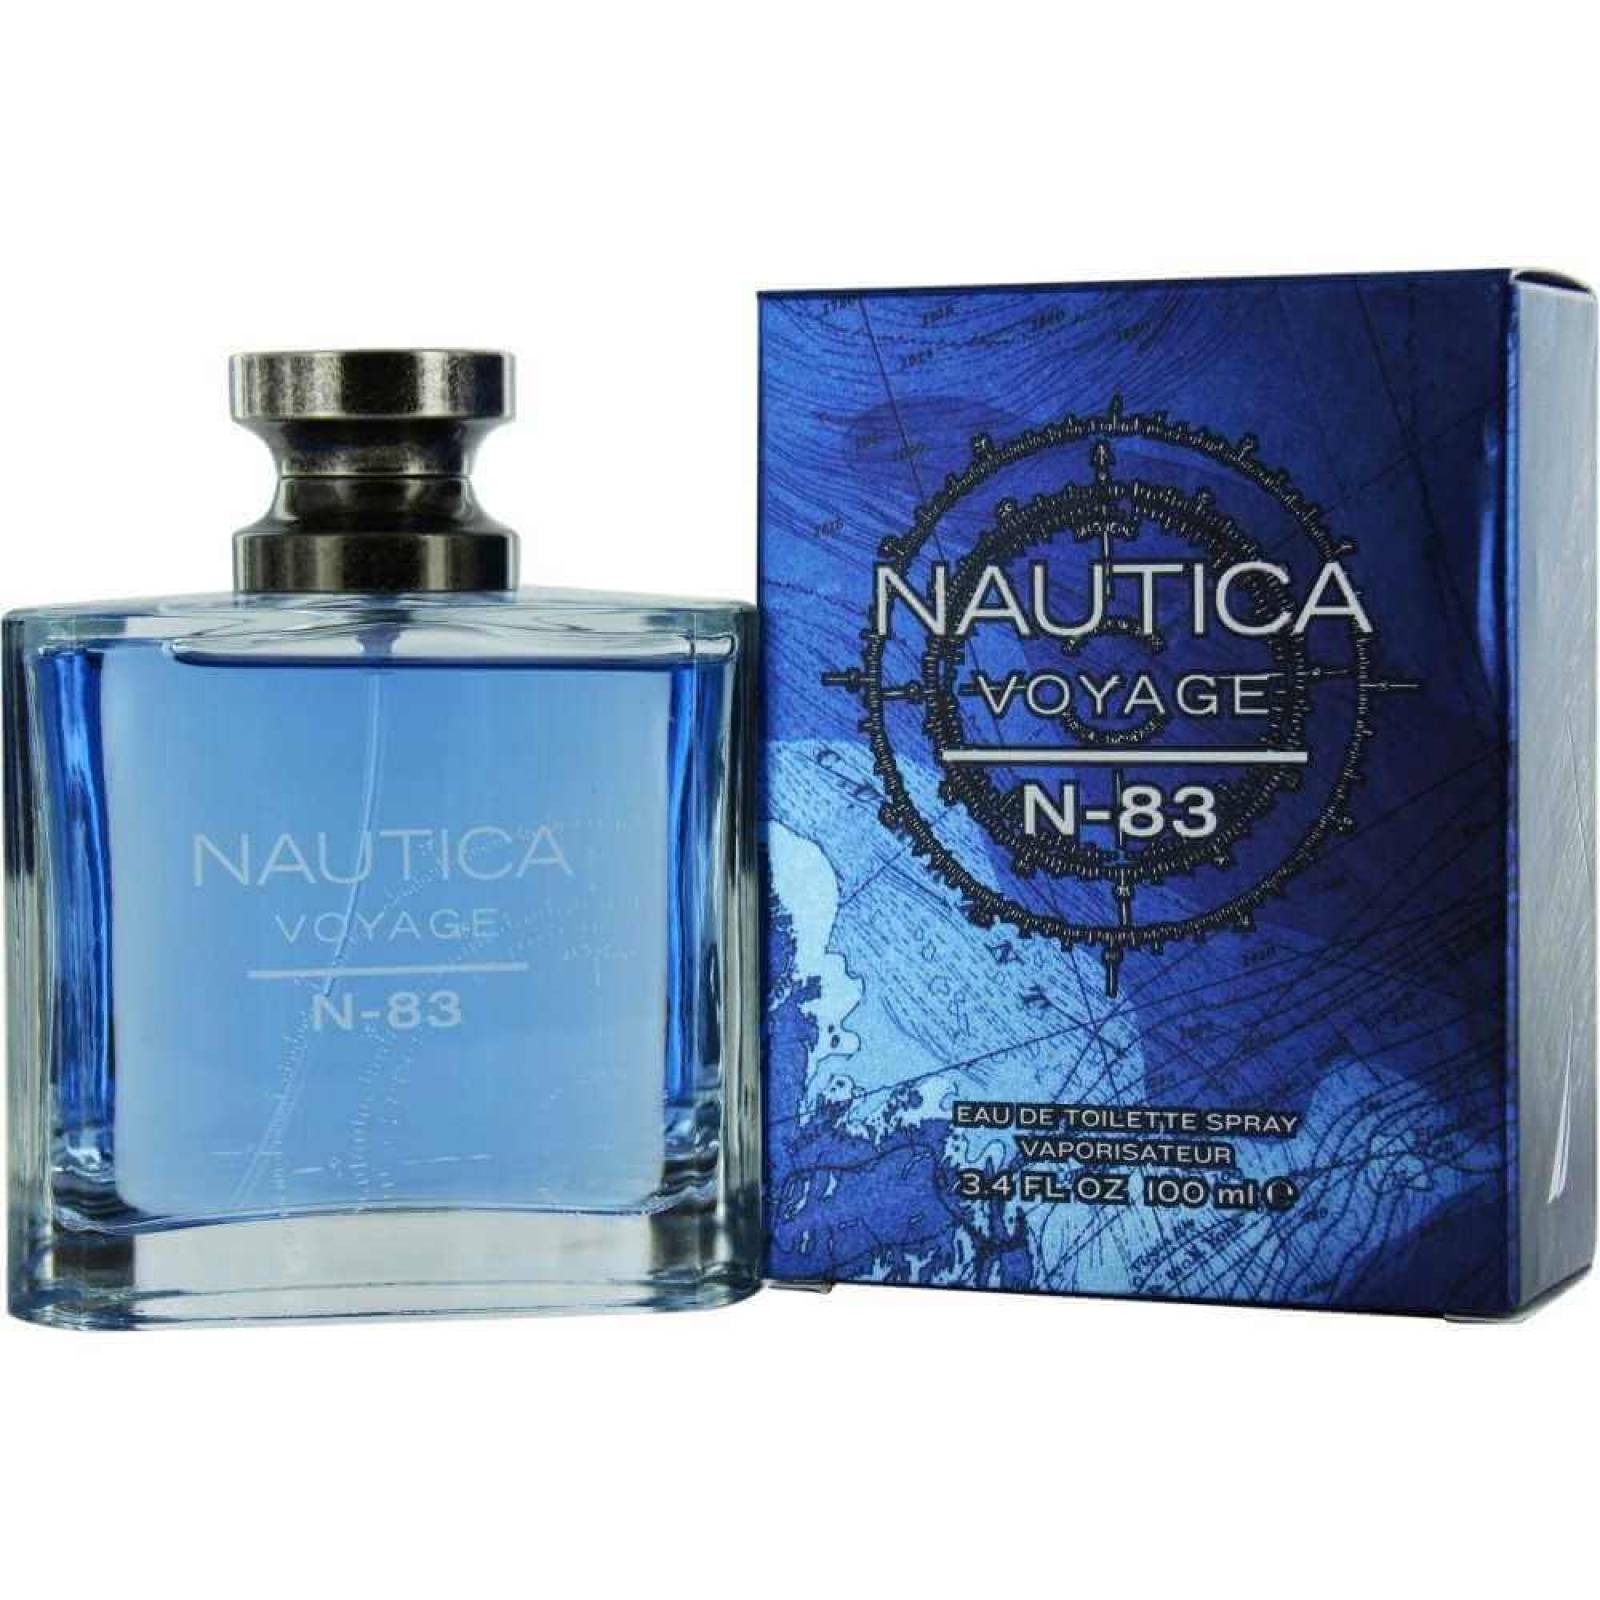 nautica voyage n 83 price